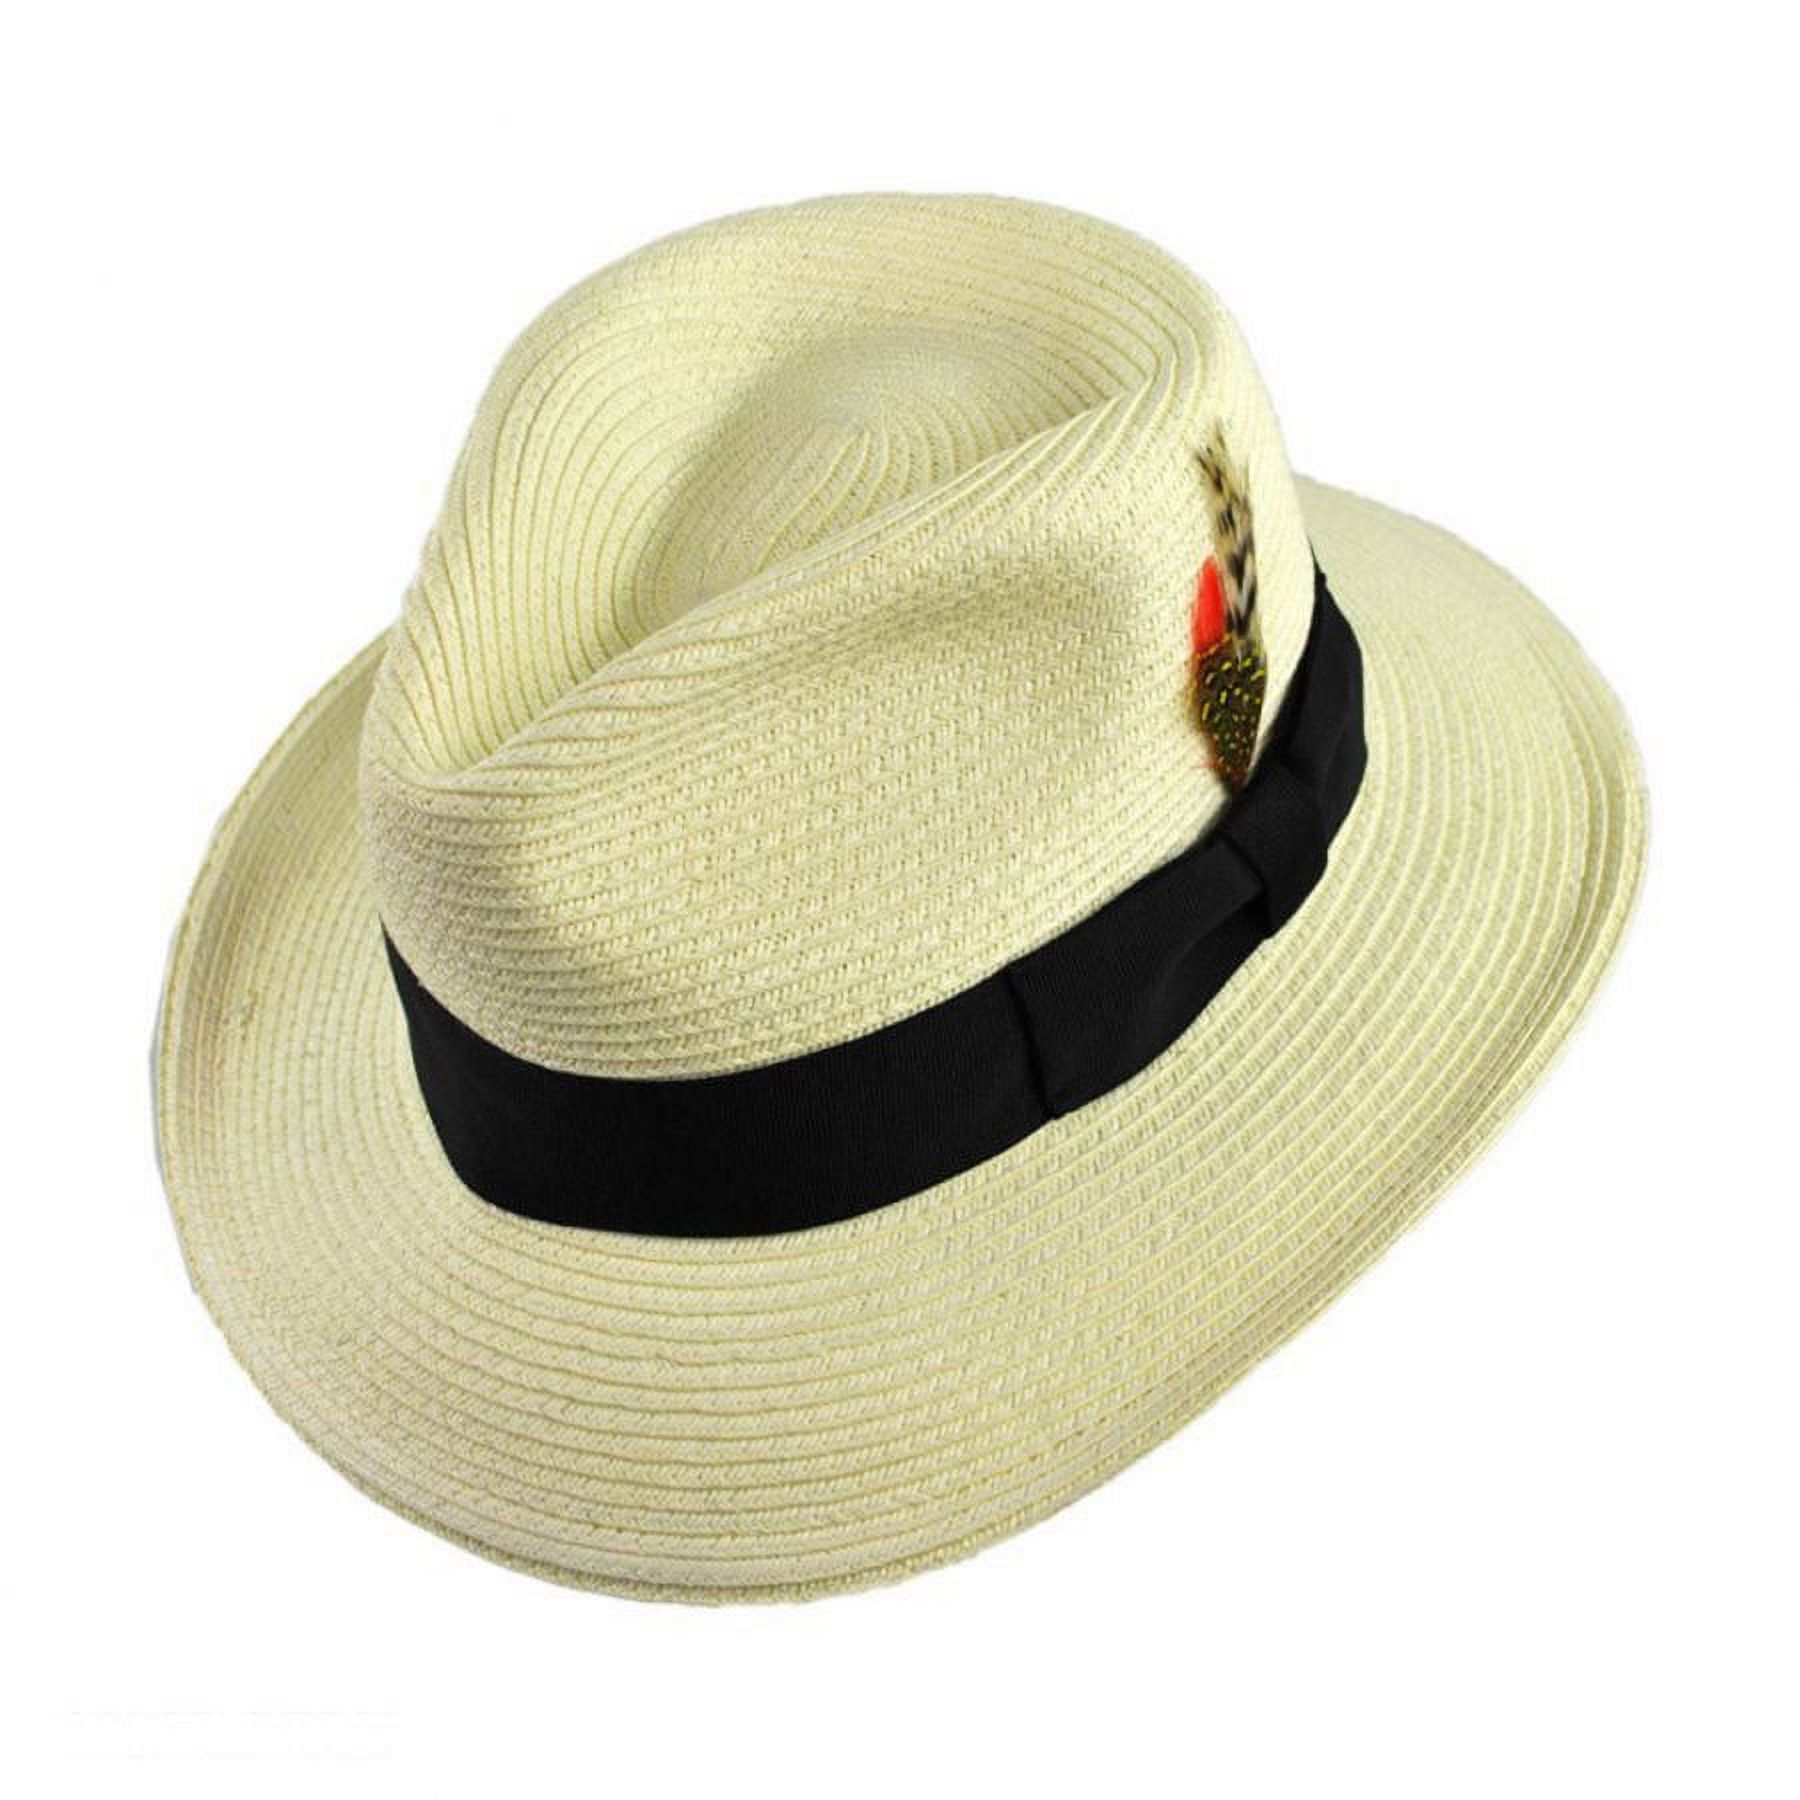 Summer C-Crown Toyo Straw Fedora Hat - XL - Ivory - image 1 of 9